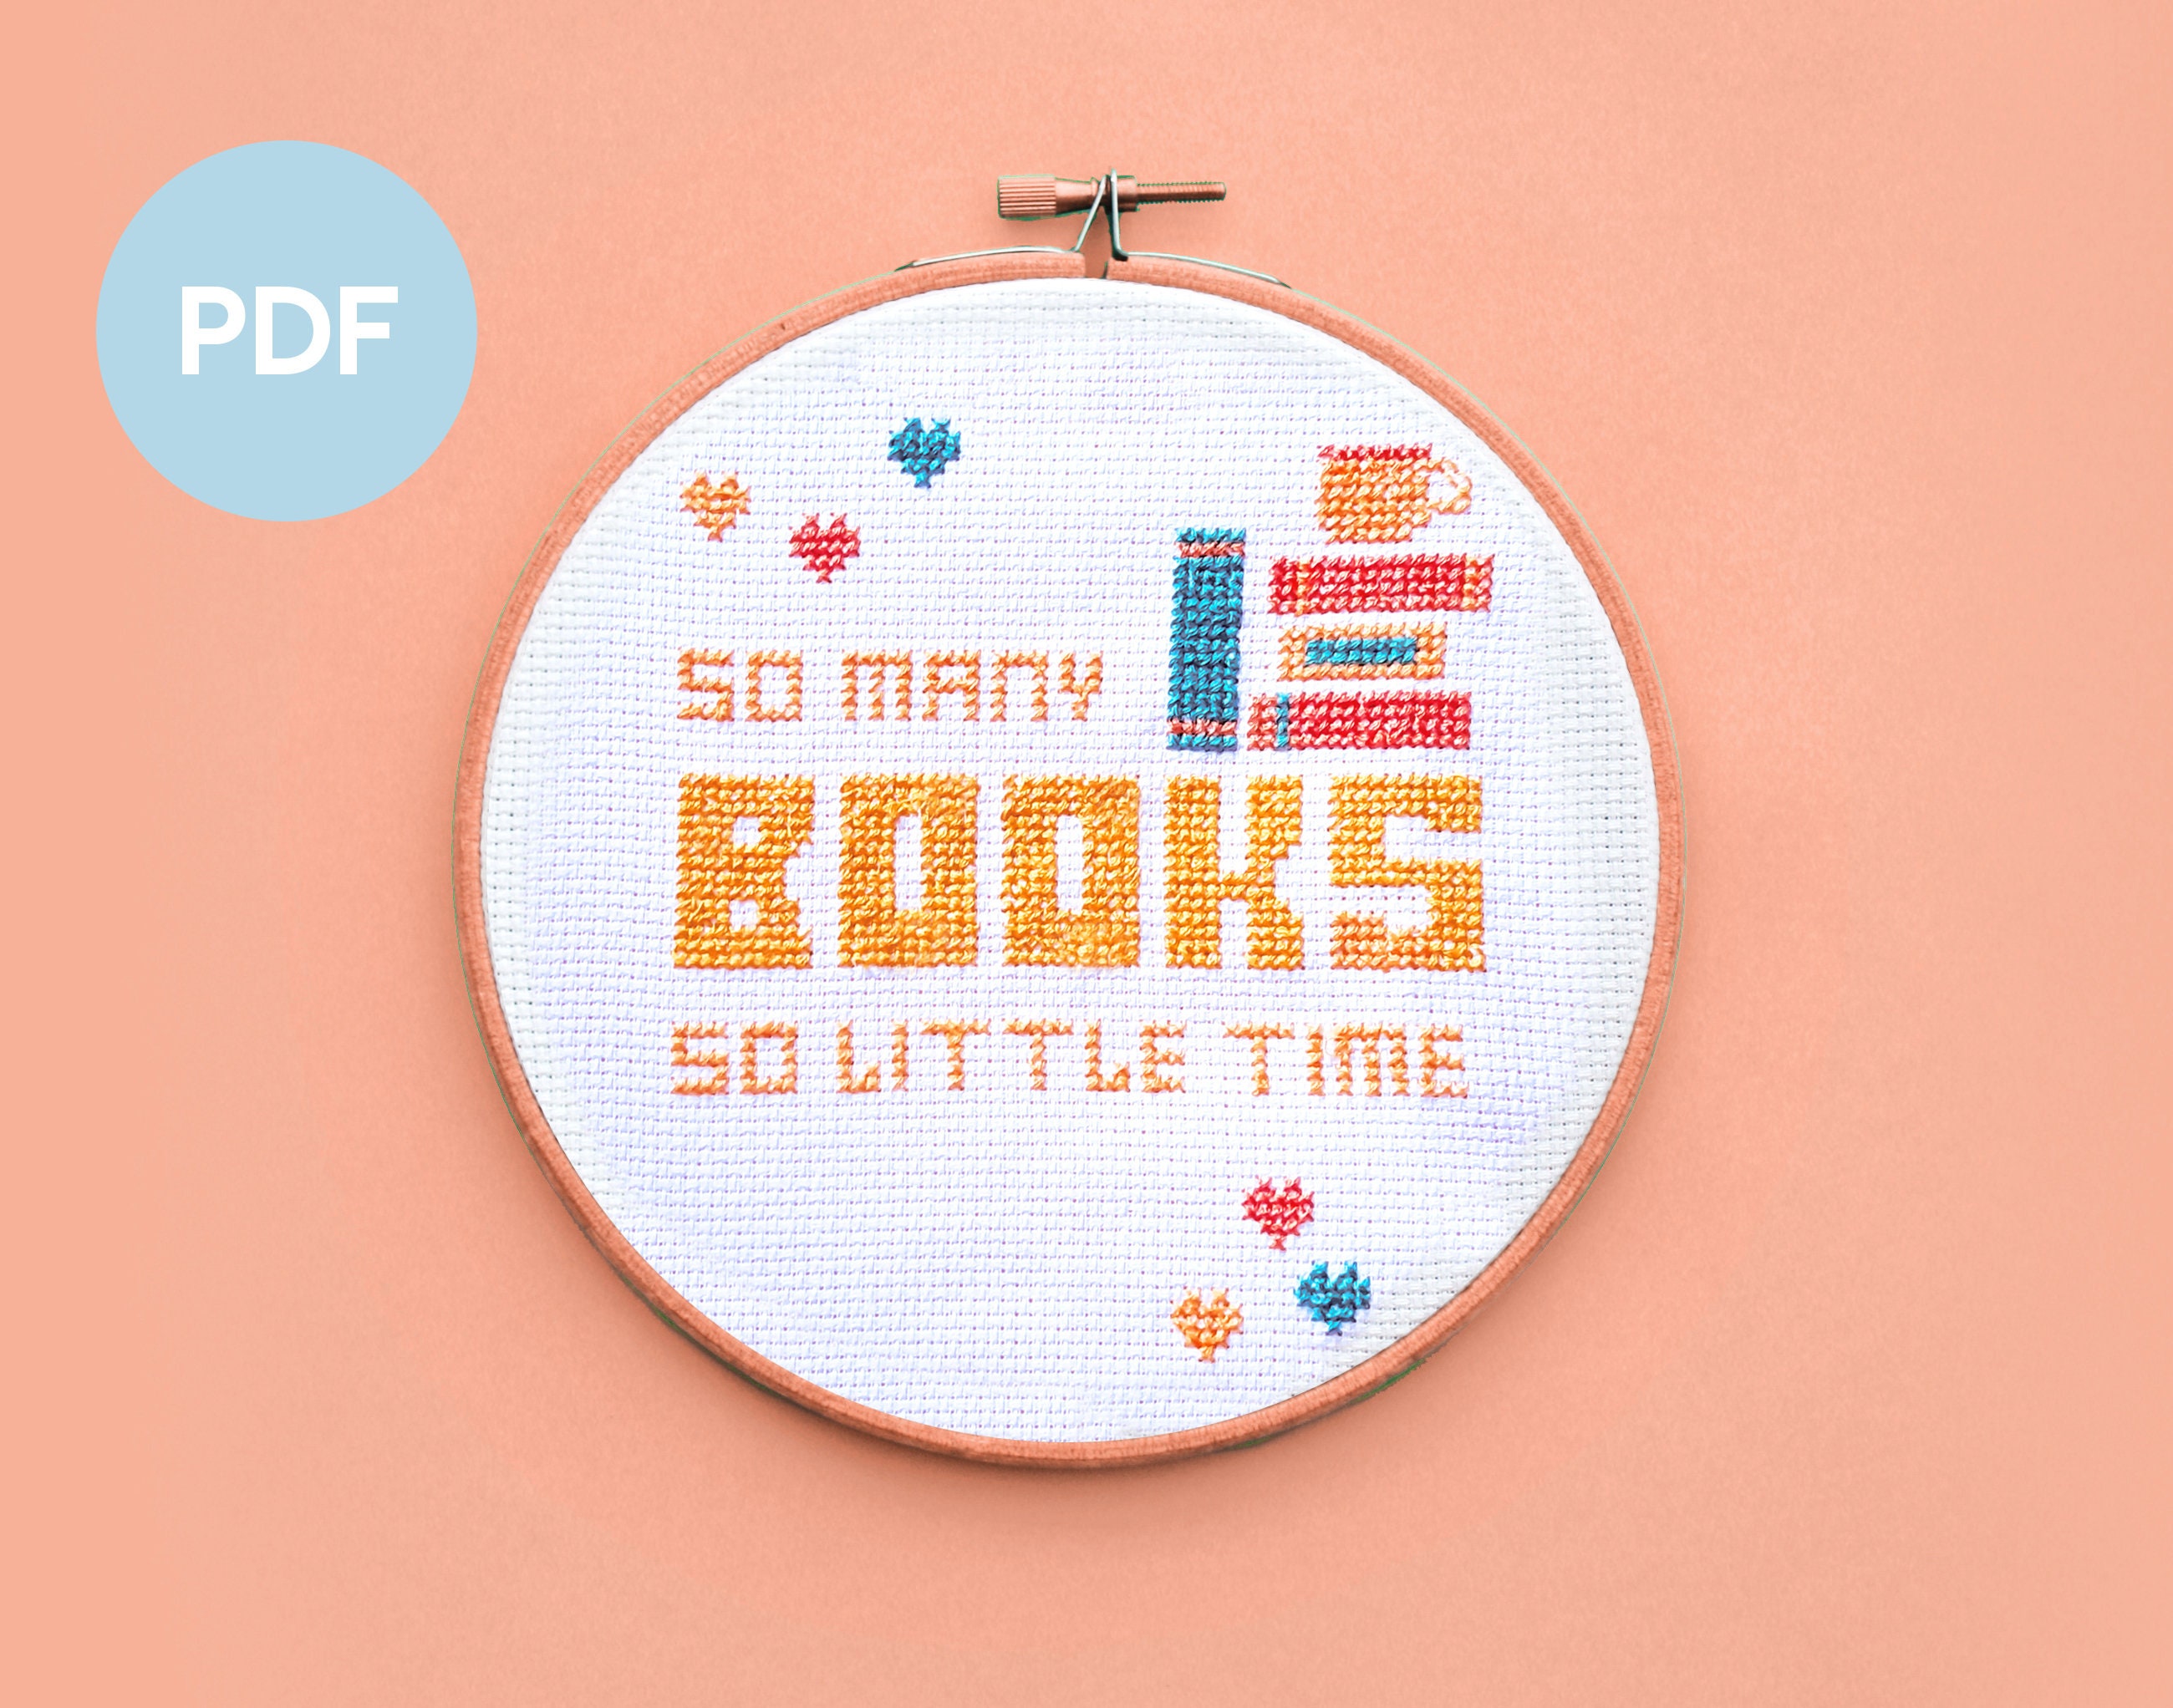 So many books, So little time Cross Stitch Pattern – Daily Cross Stitch